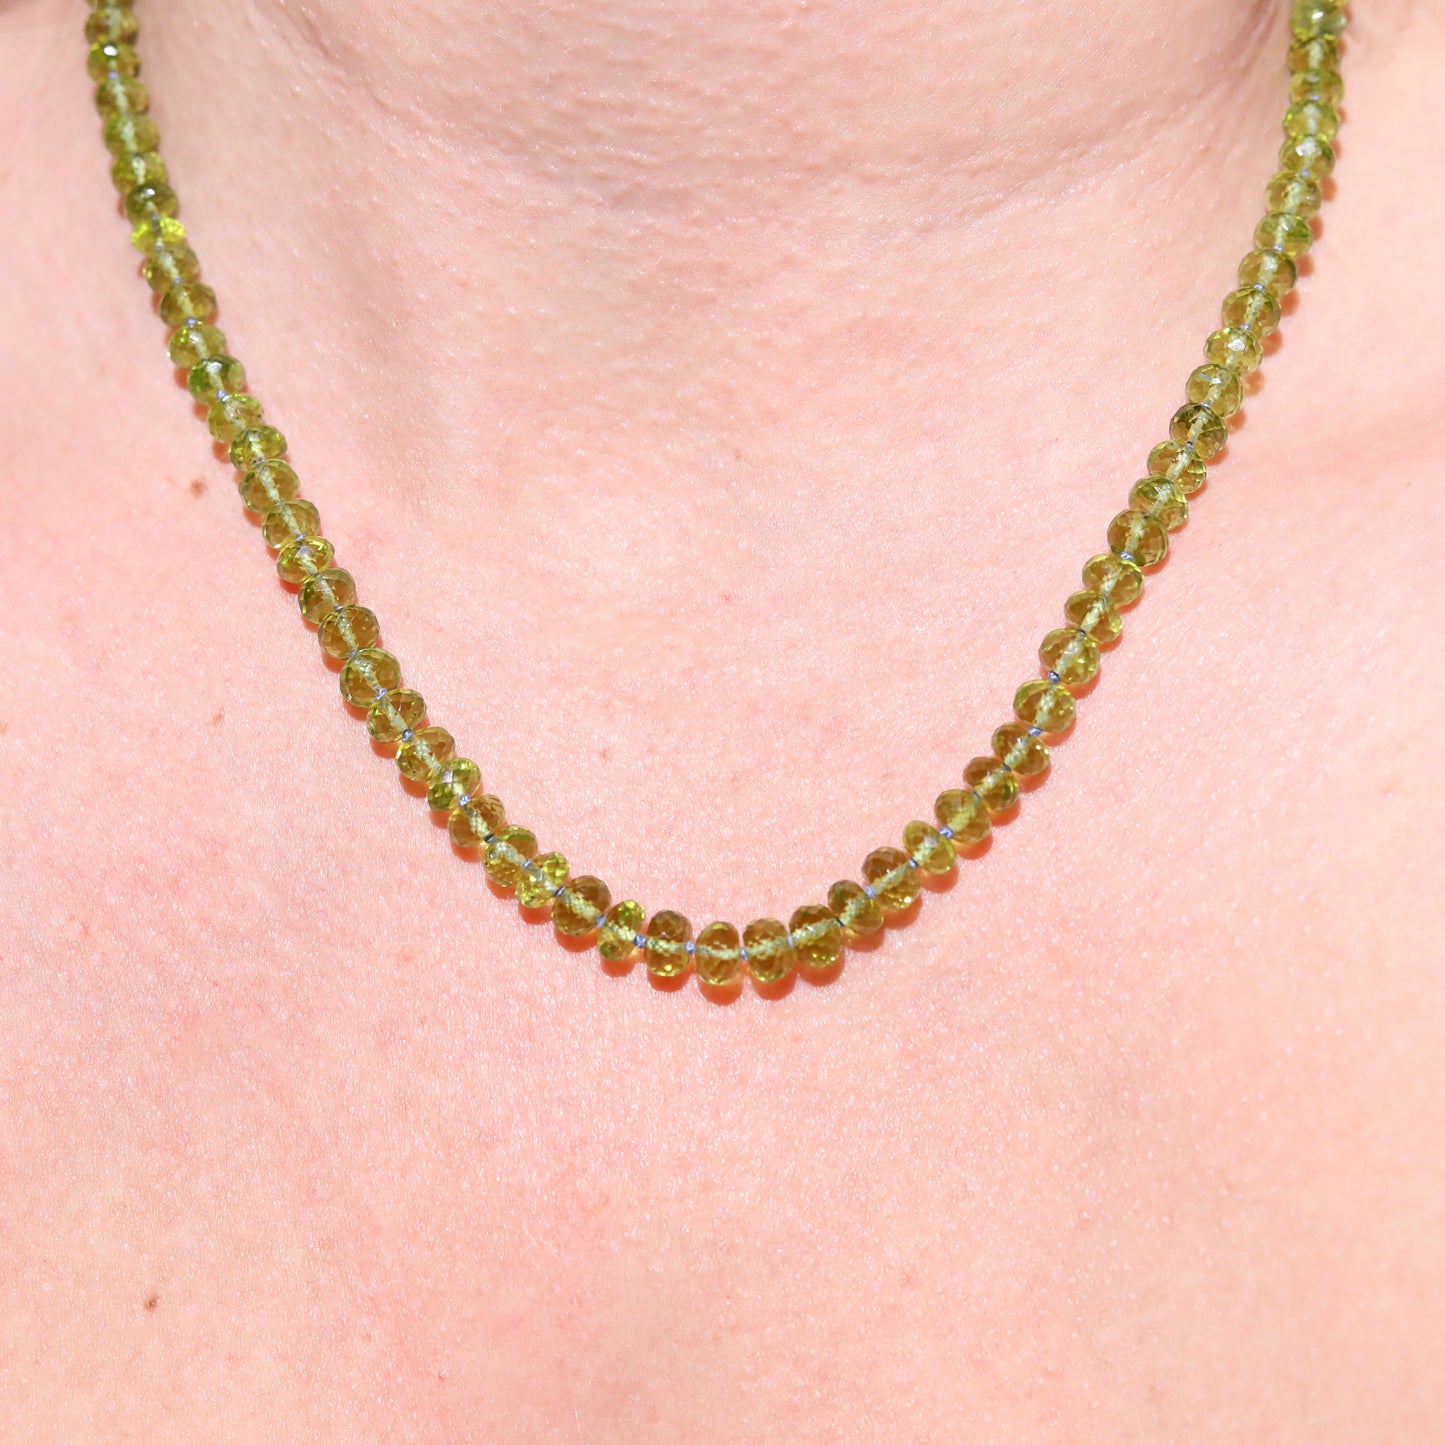 green peridot august birthstone penelope beaded candy necklace gemstone peridot rondelles 14k gold